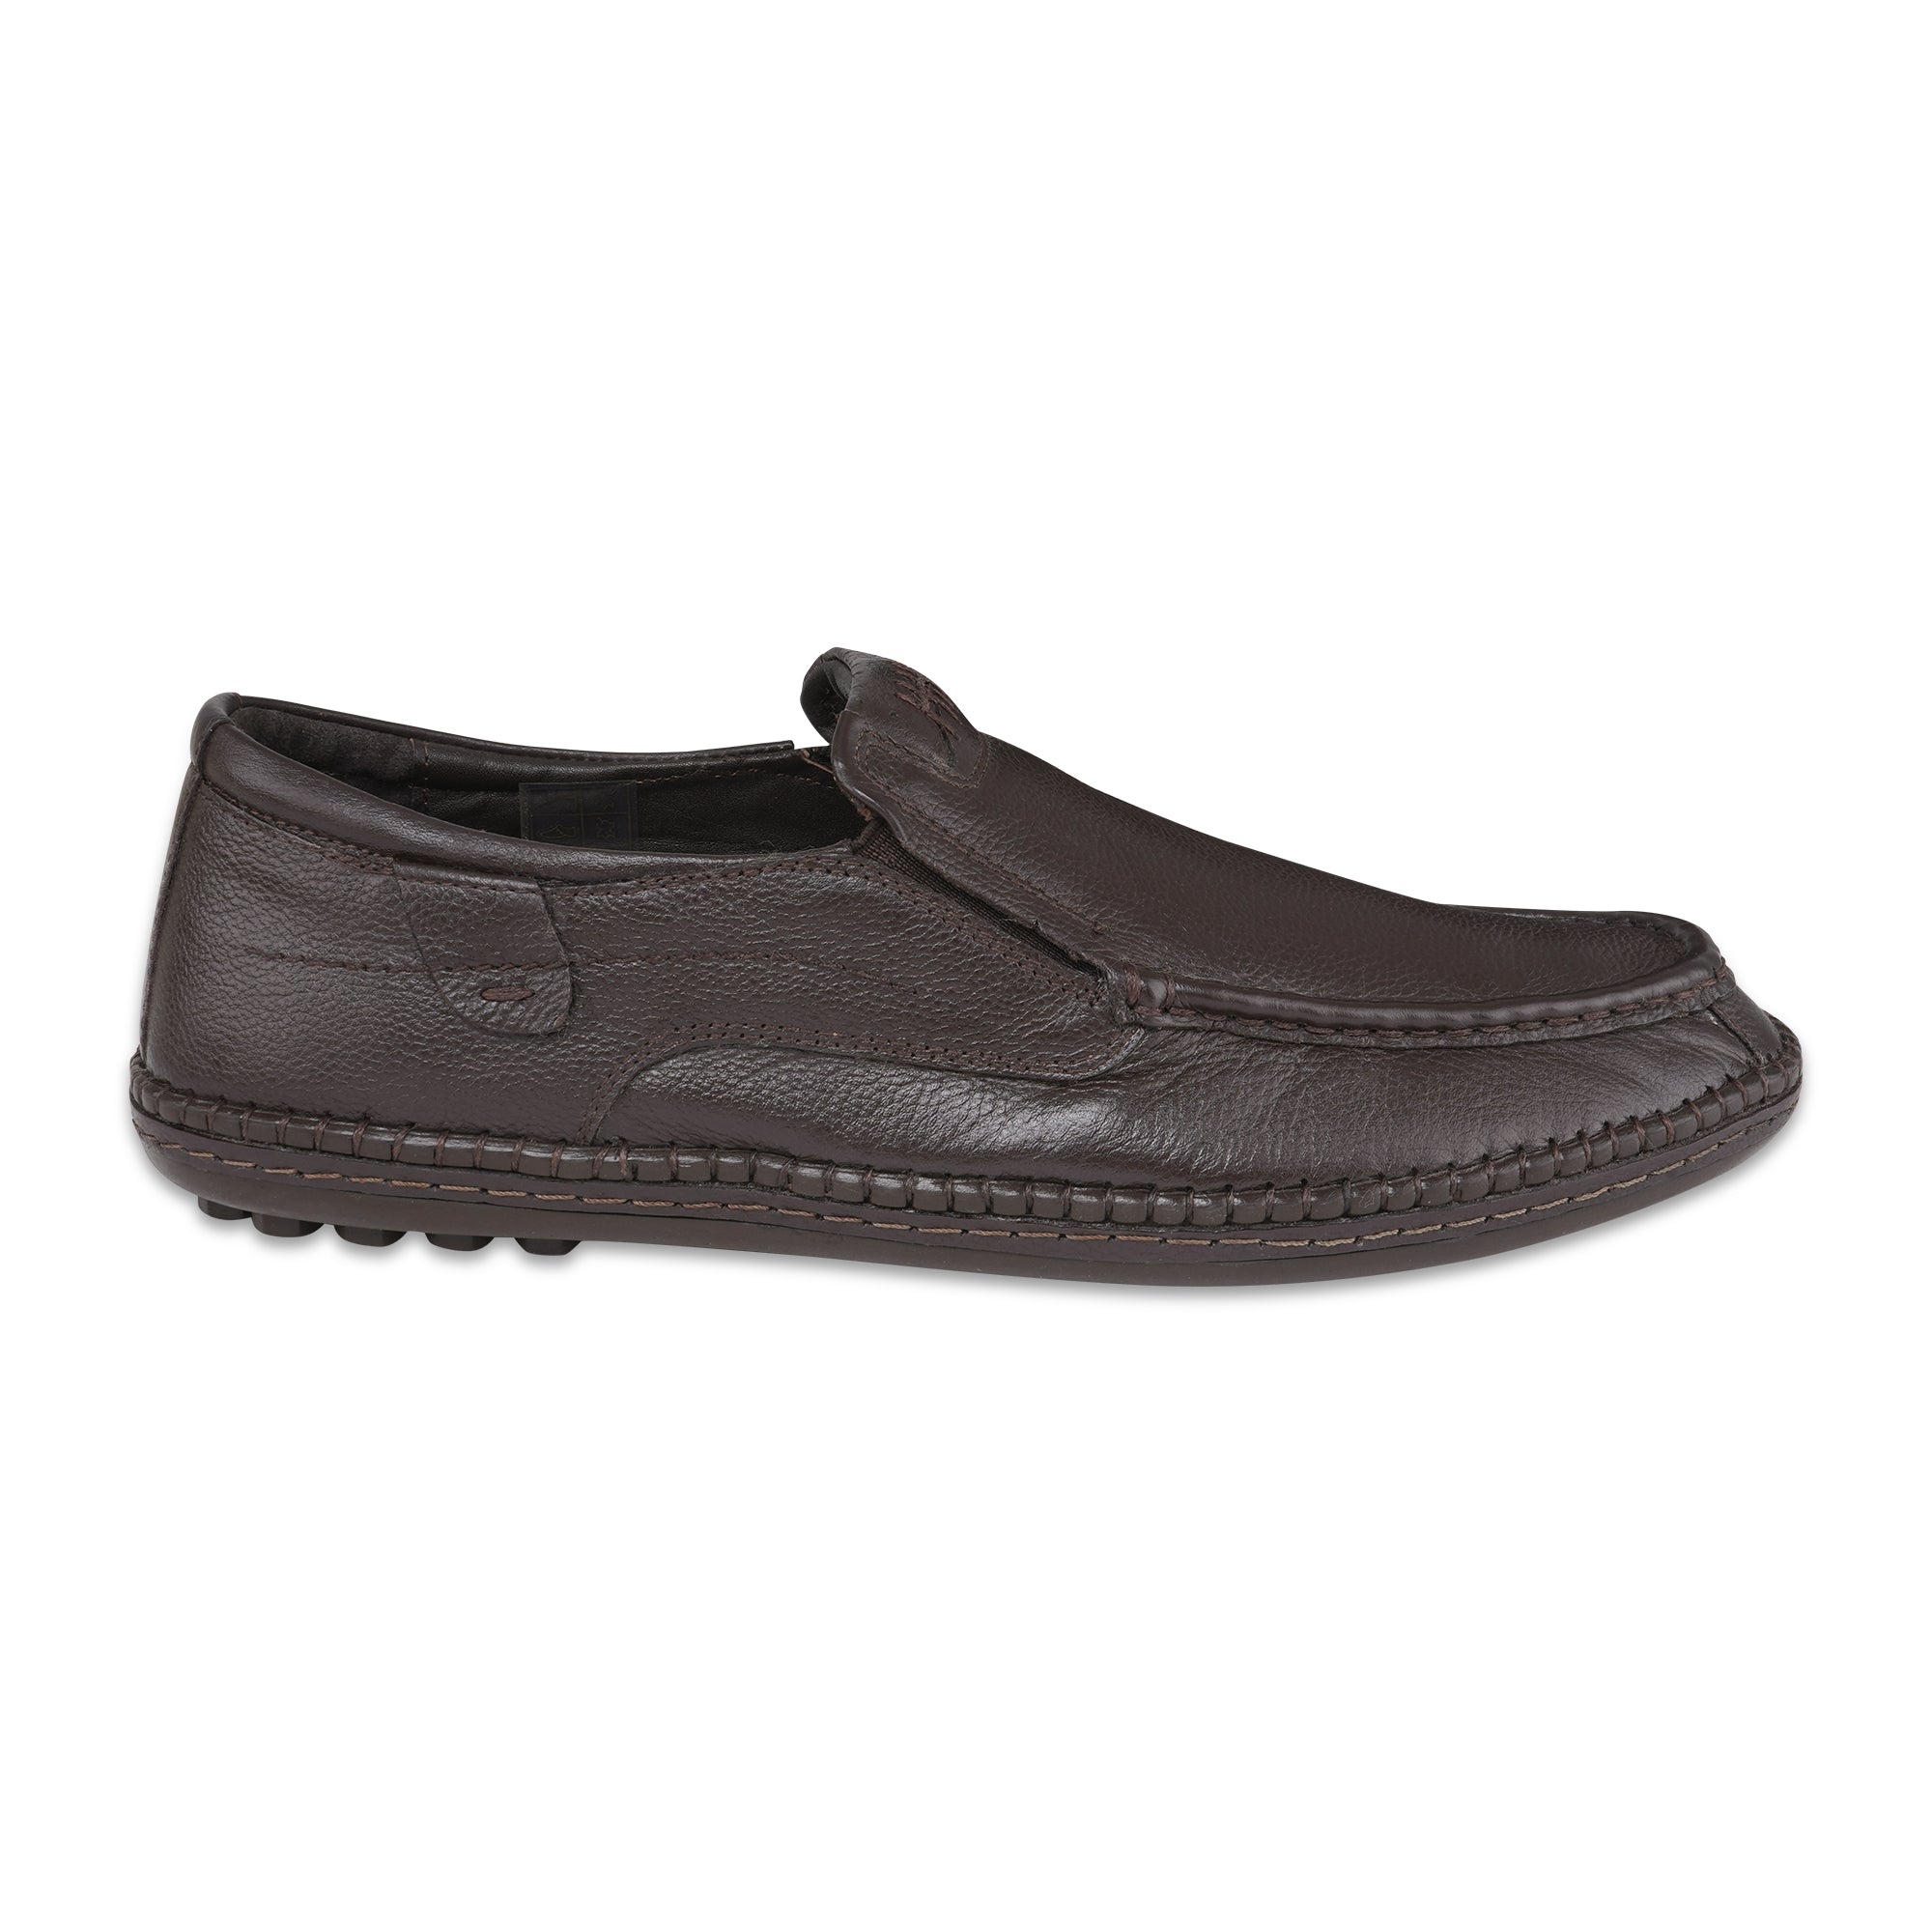 Ezok Men Brown Casual Leather Shoes For Men